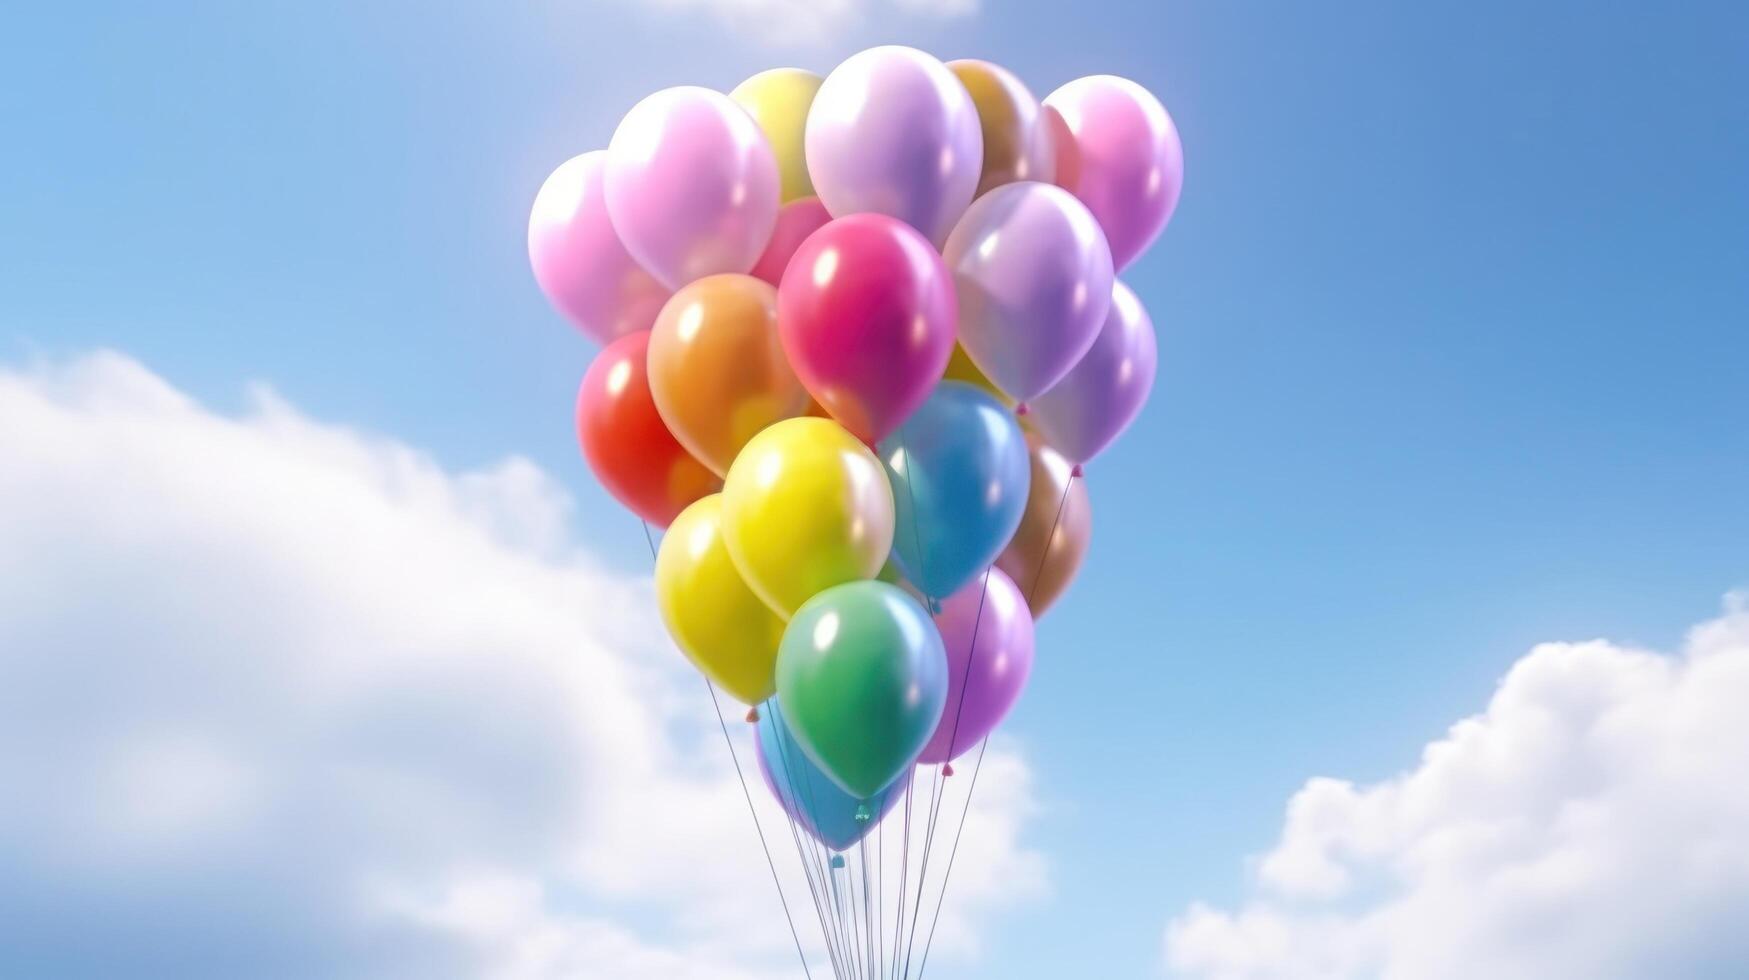 Colorful rainbow air balloons. Illustration photo